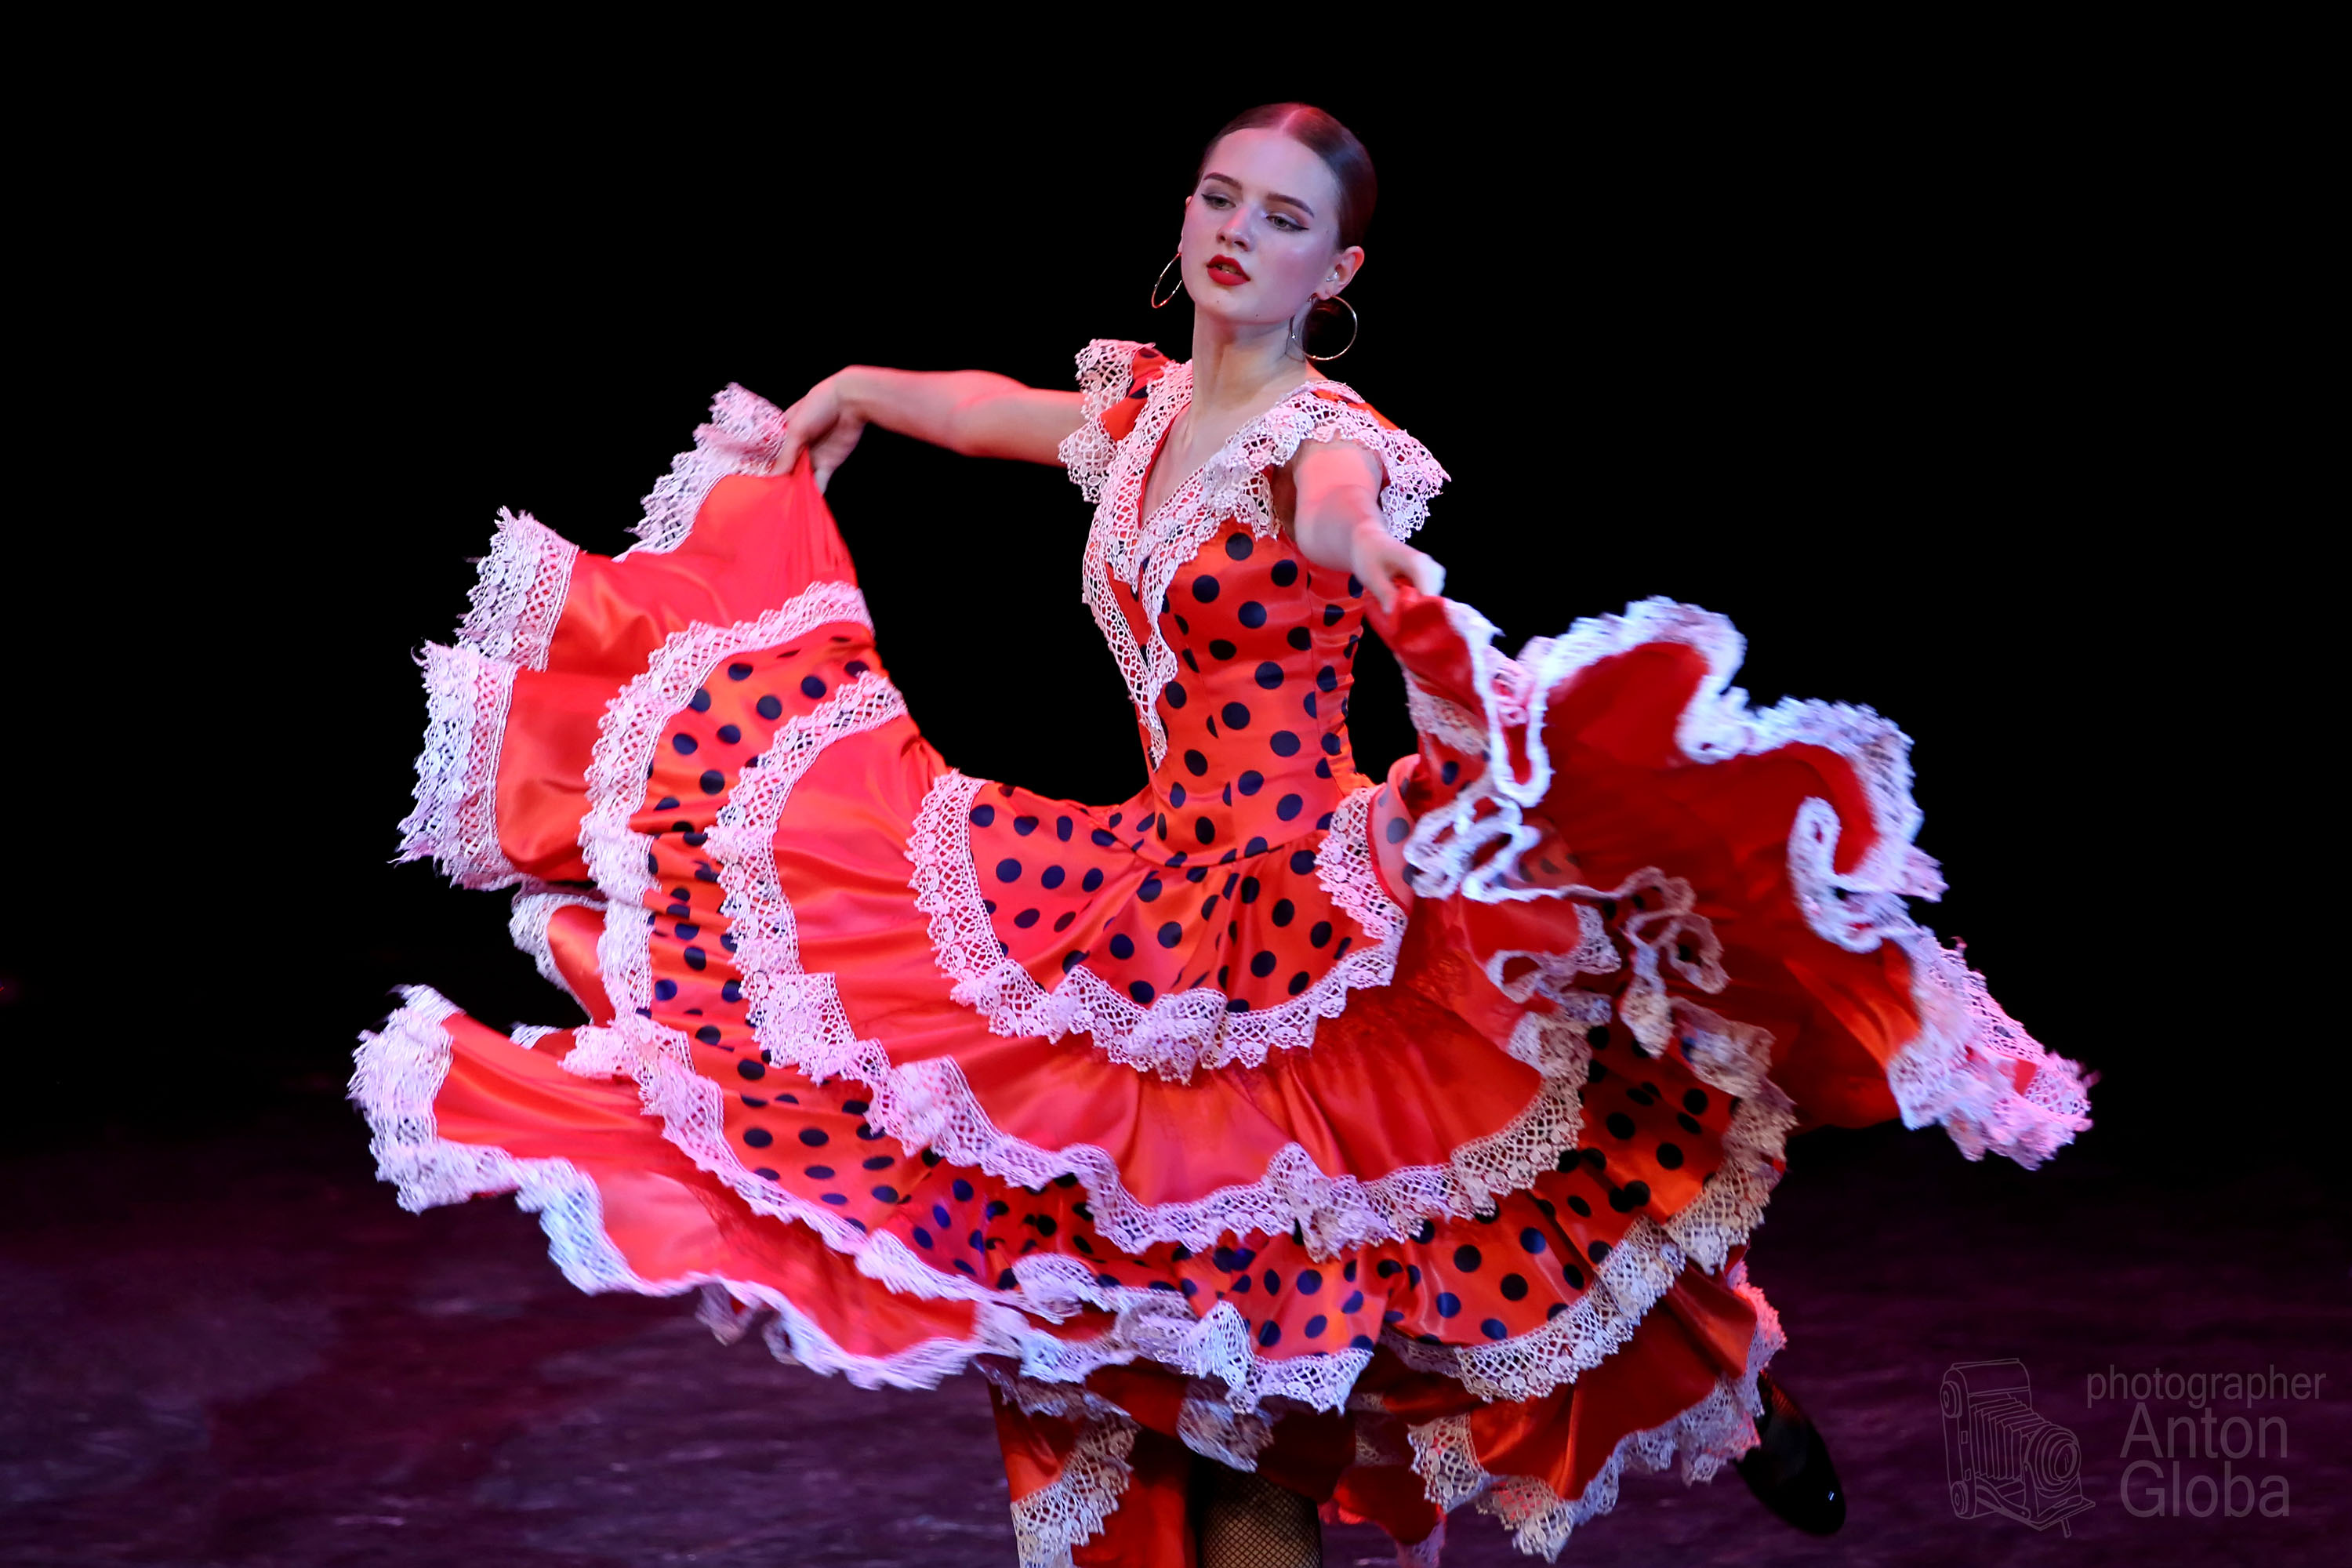 "Испанский танец", ансамбль "Ритмы детства". "Spanish dance", ensemble "Rhythms of childhood".